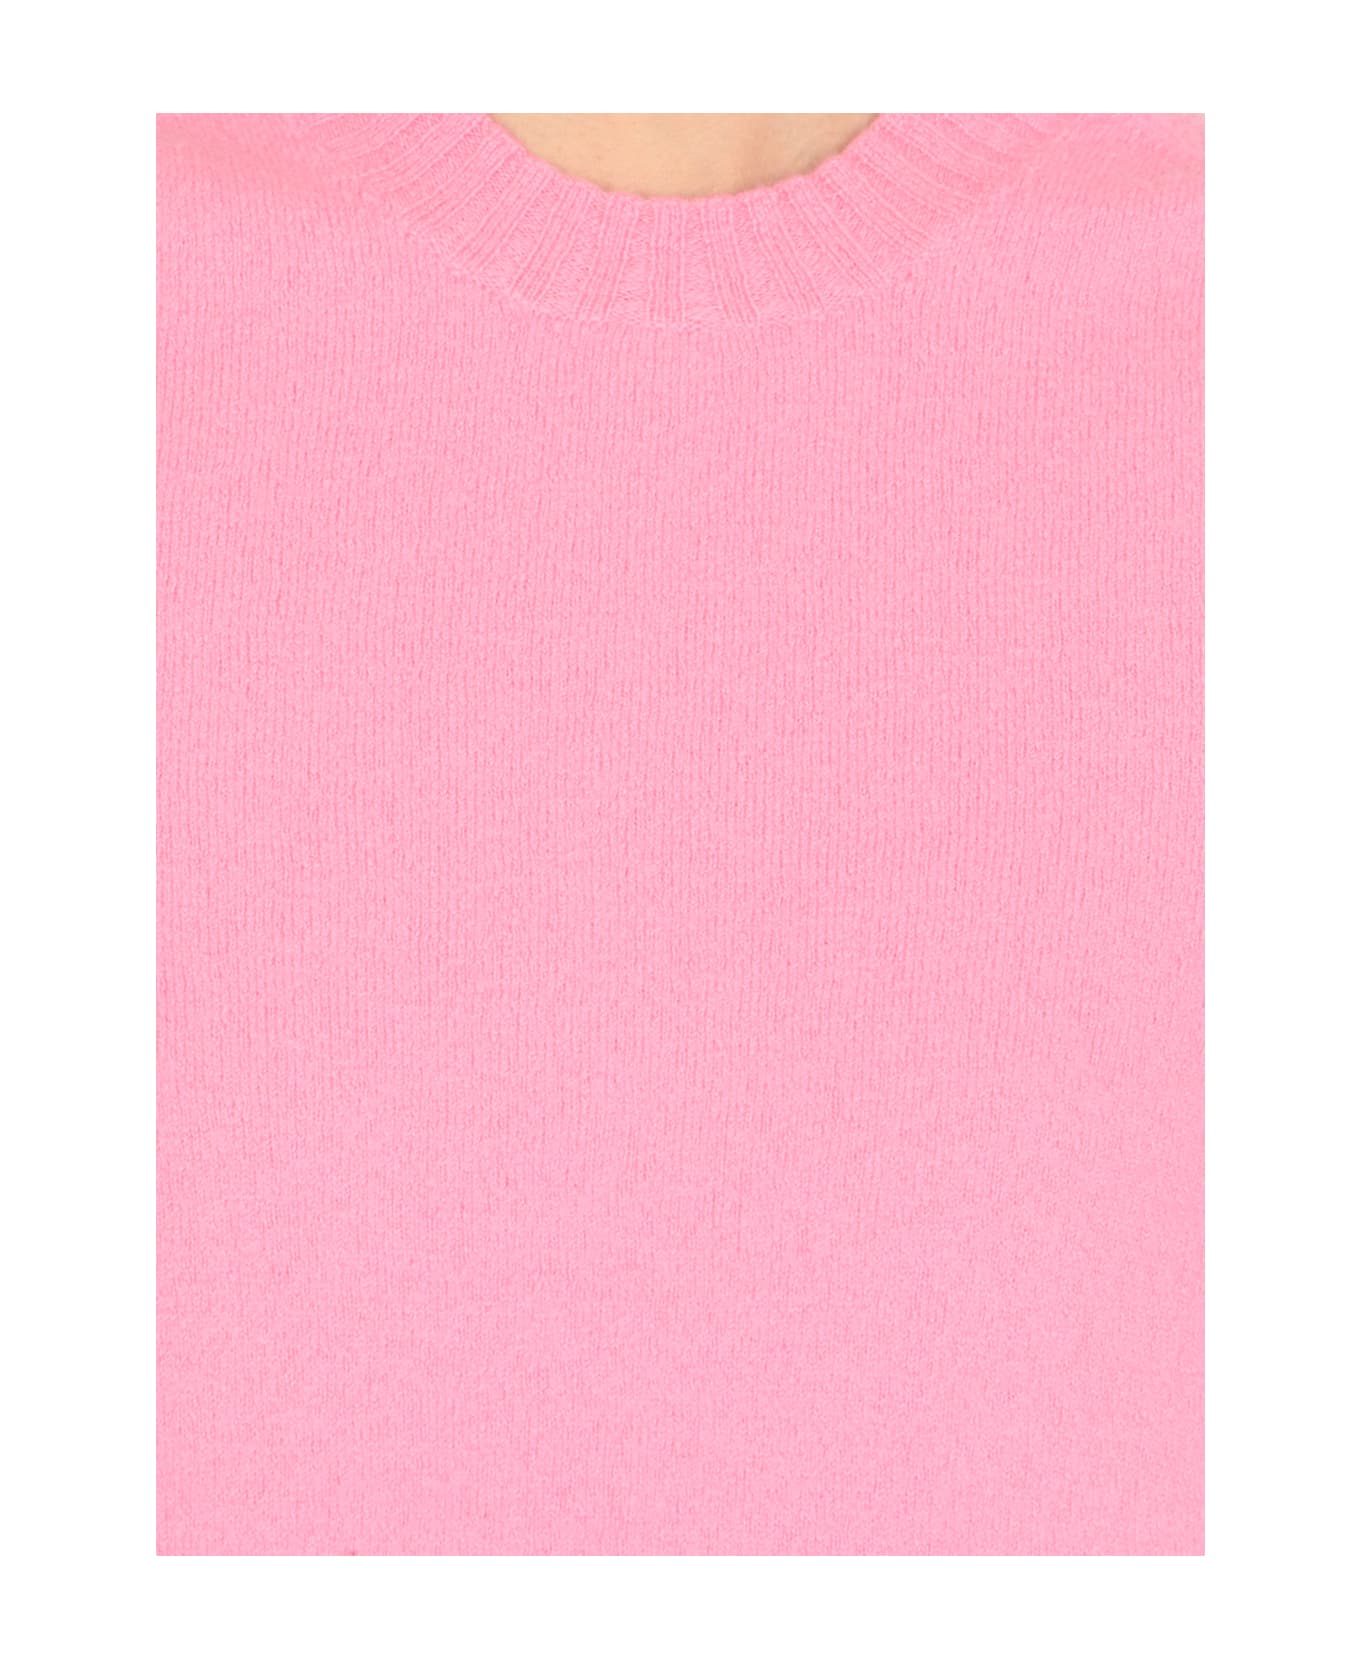 Jil Sander Wool Sweater - Pink